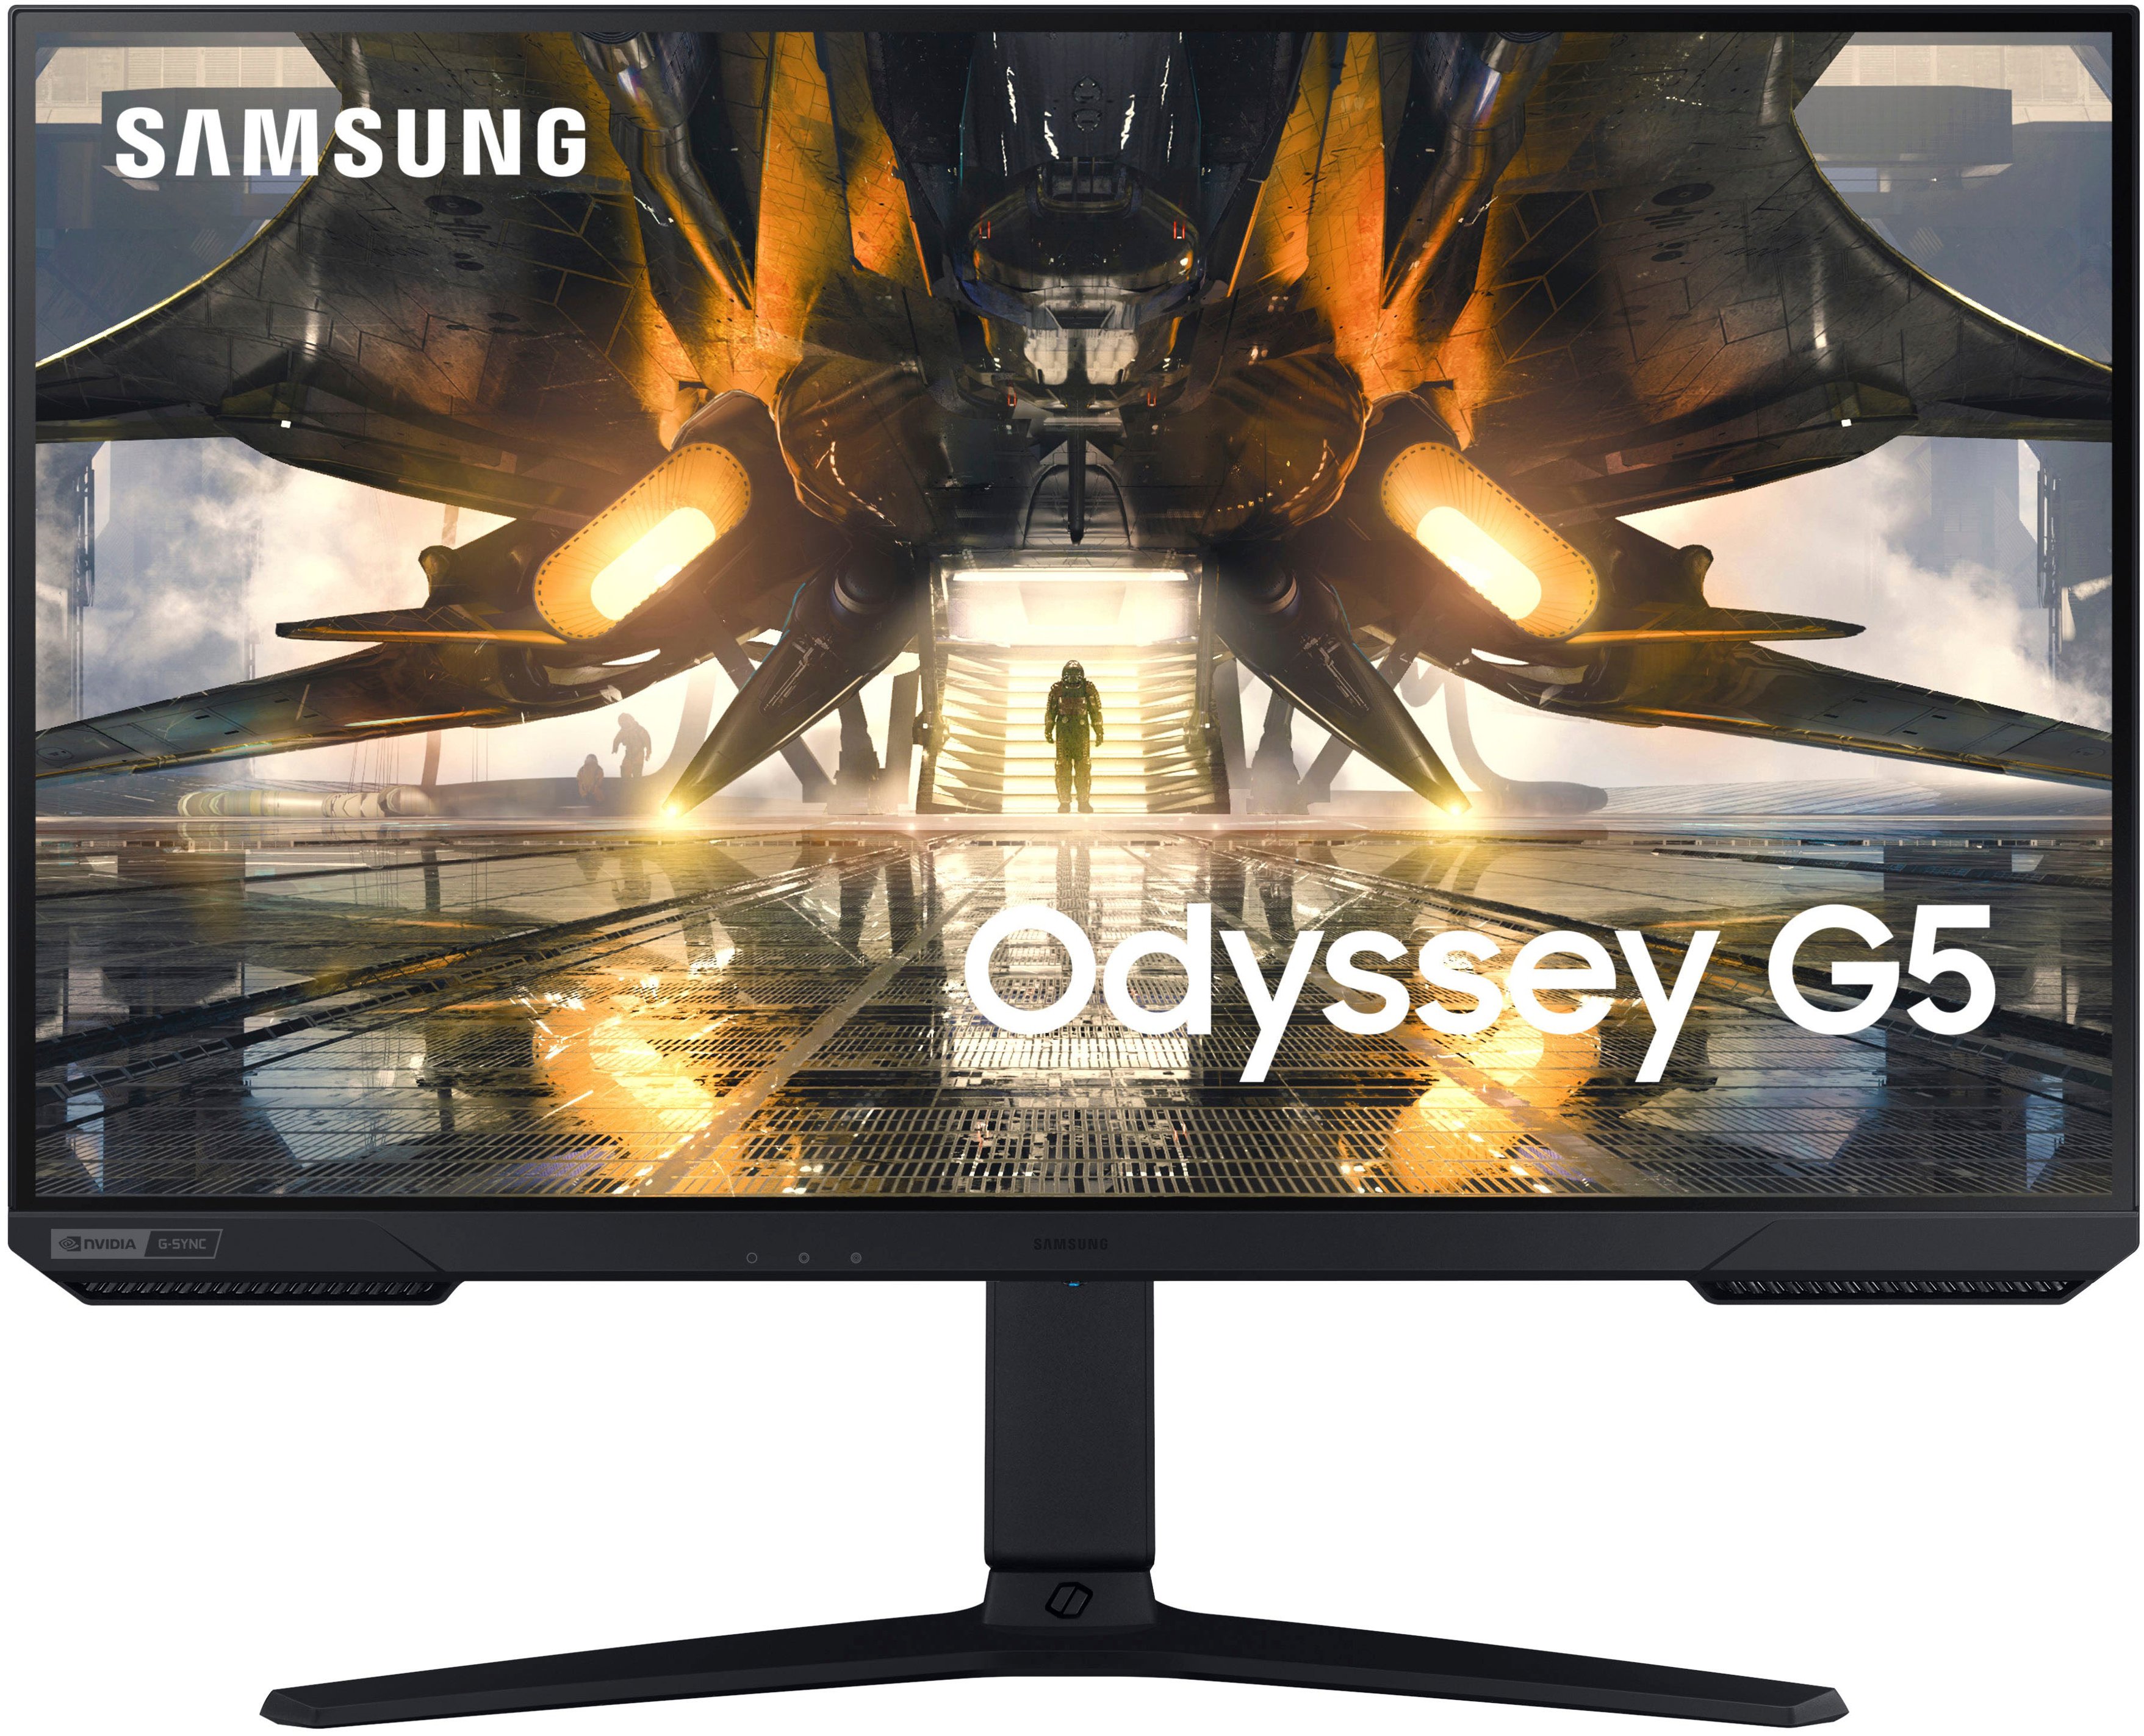 Samsung EPP Odyssey 32" G52A Monitor $265